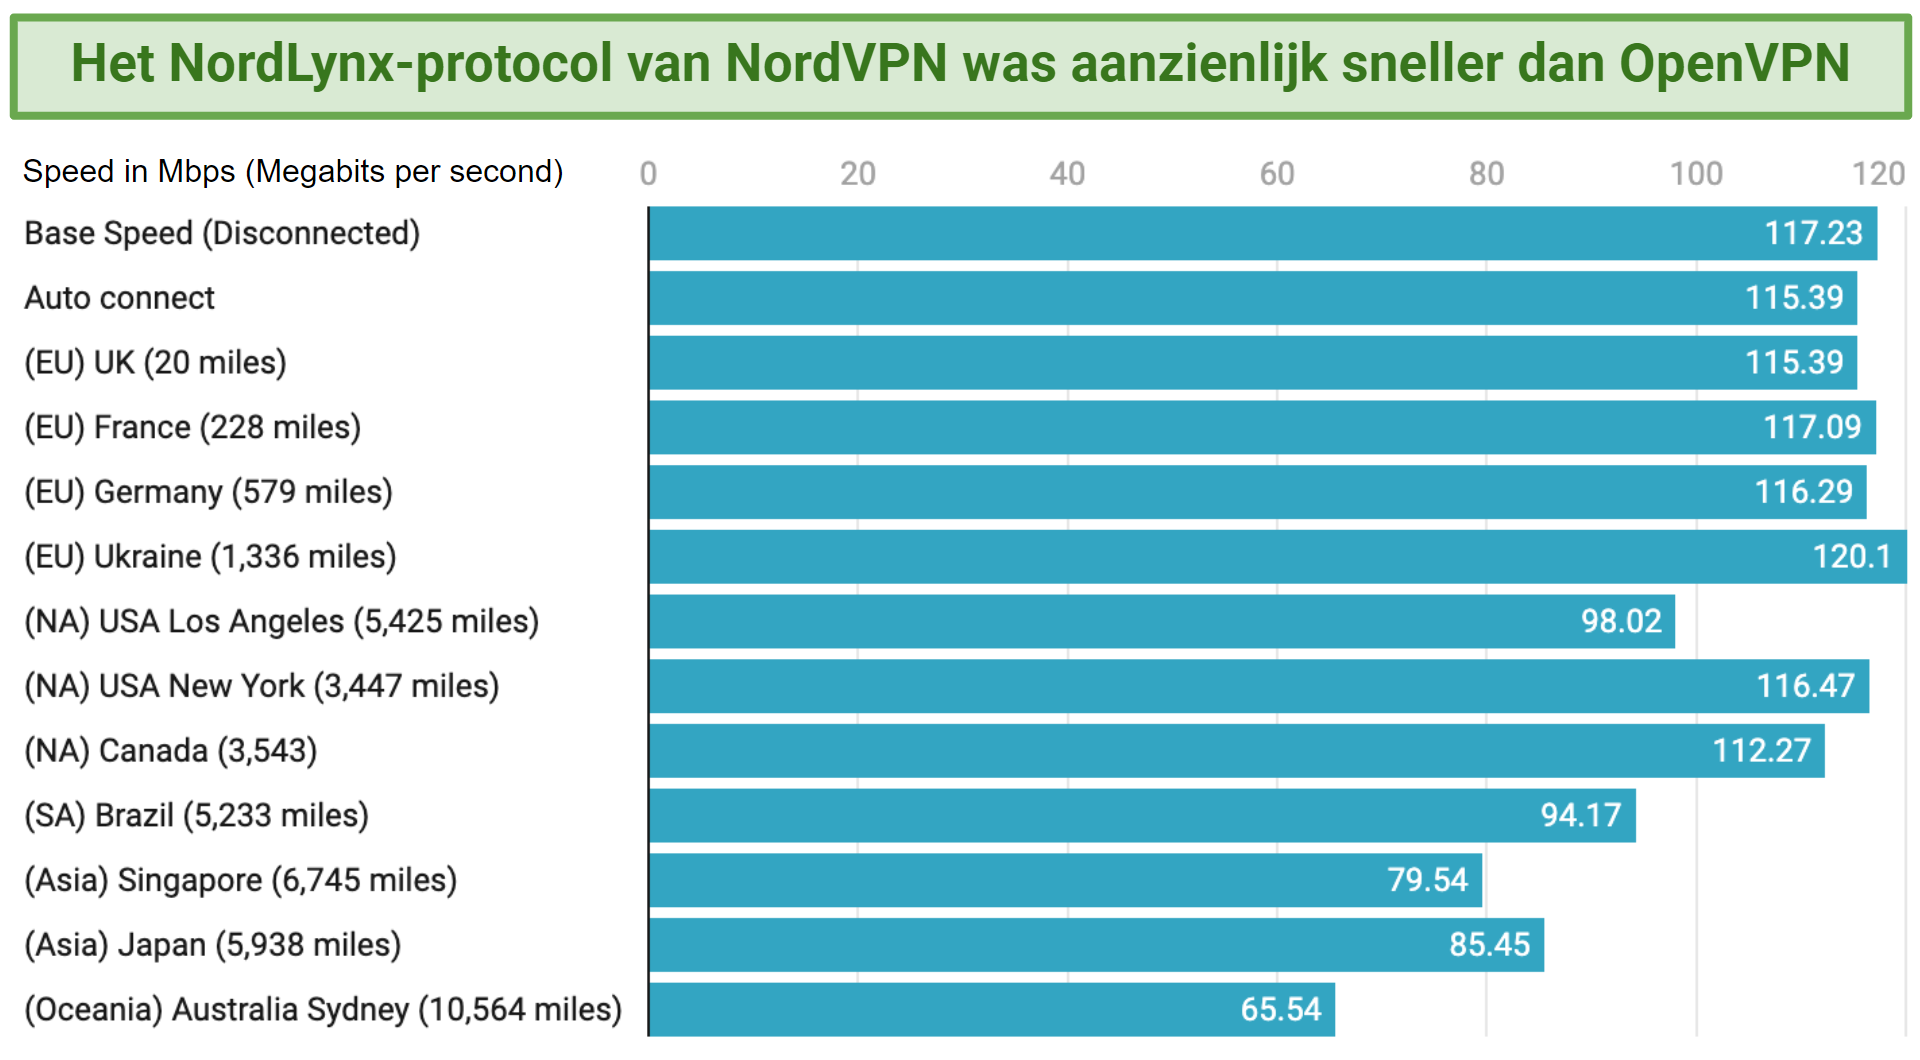 Graph showing NordVPN's speeds over various distances